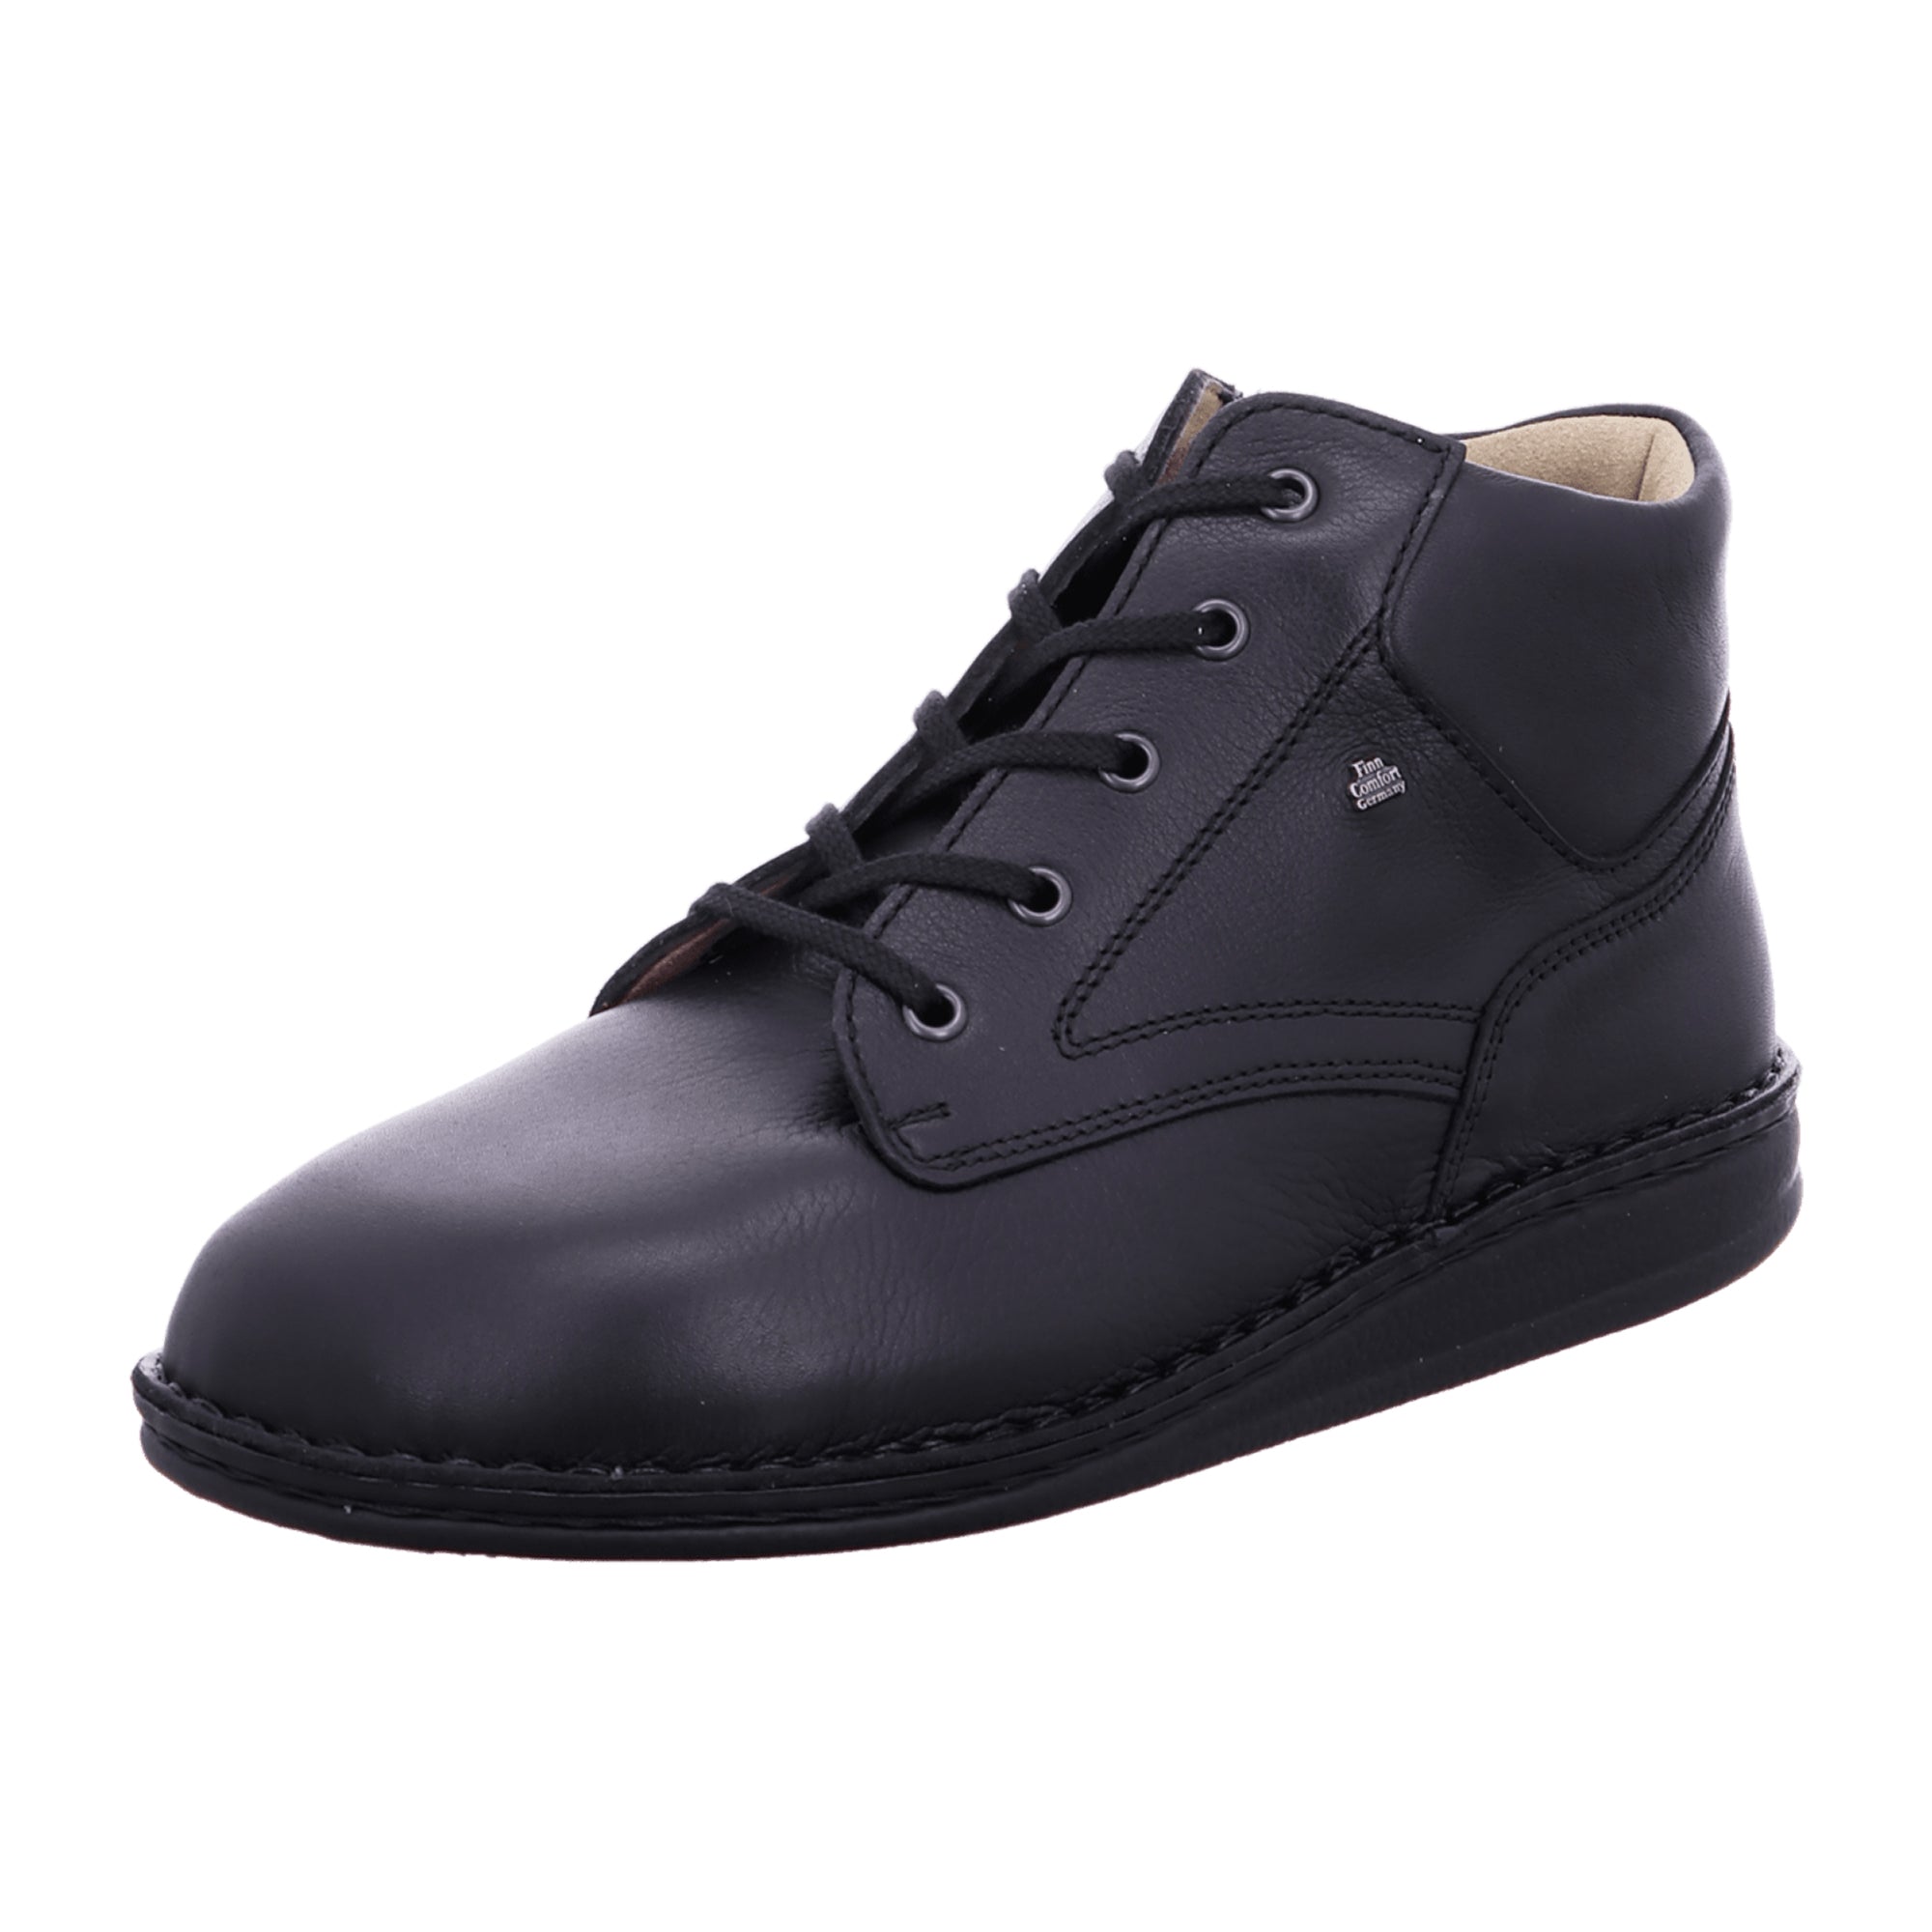 Finn Comfort 96104 Men's Black Comfort Shoes - Stylish & Durable